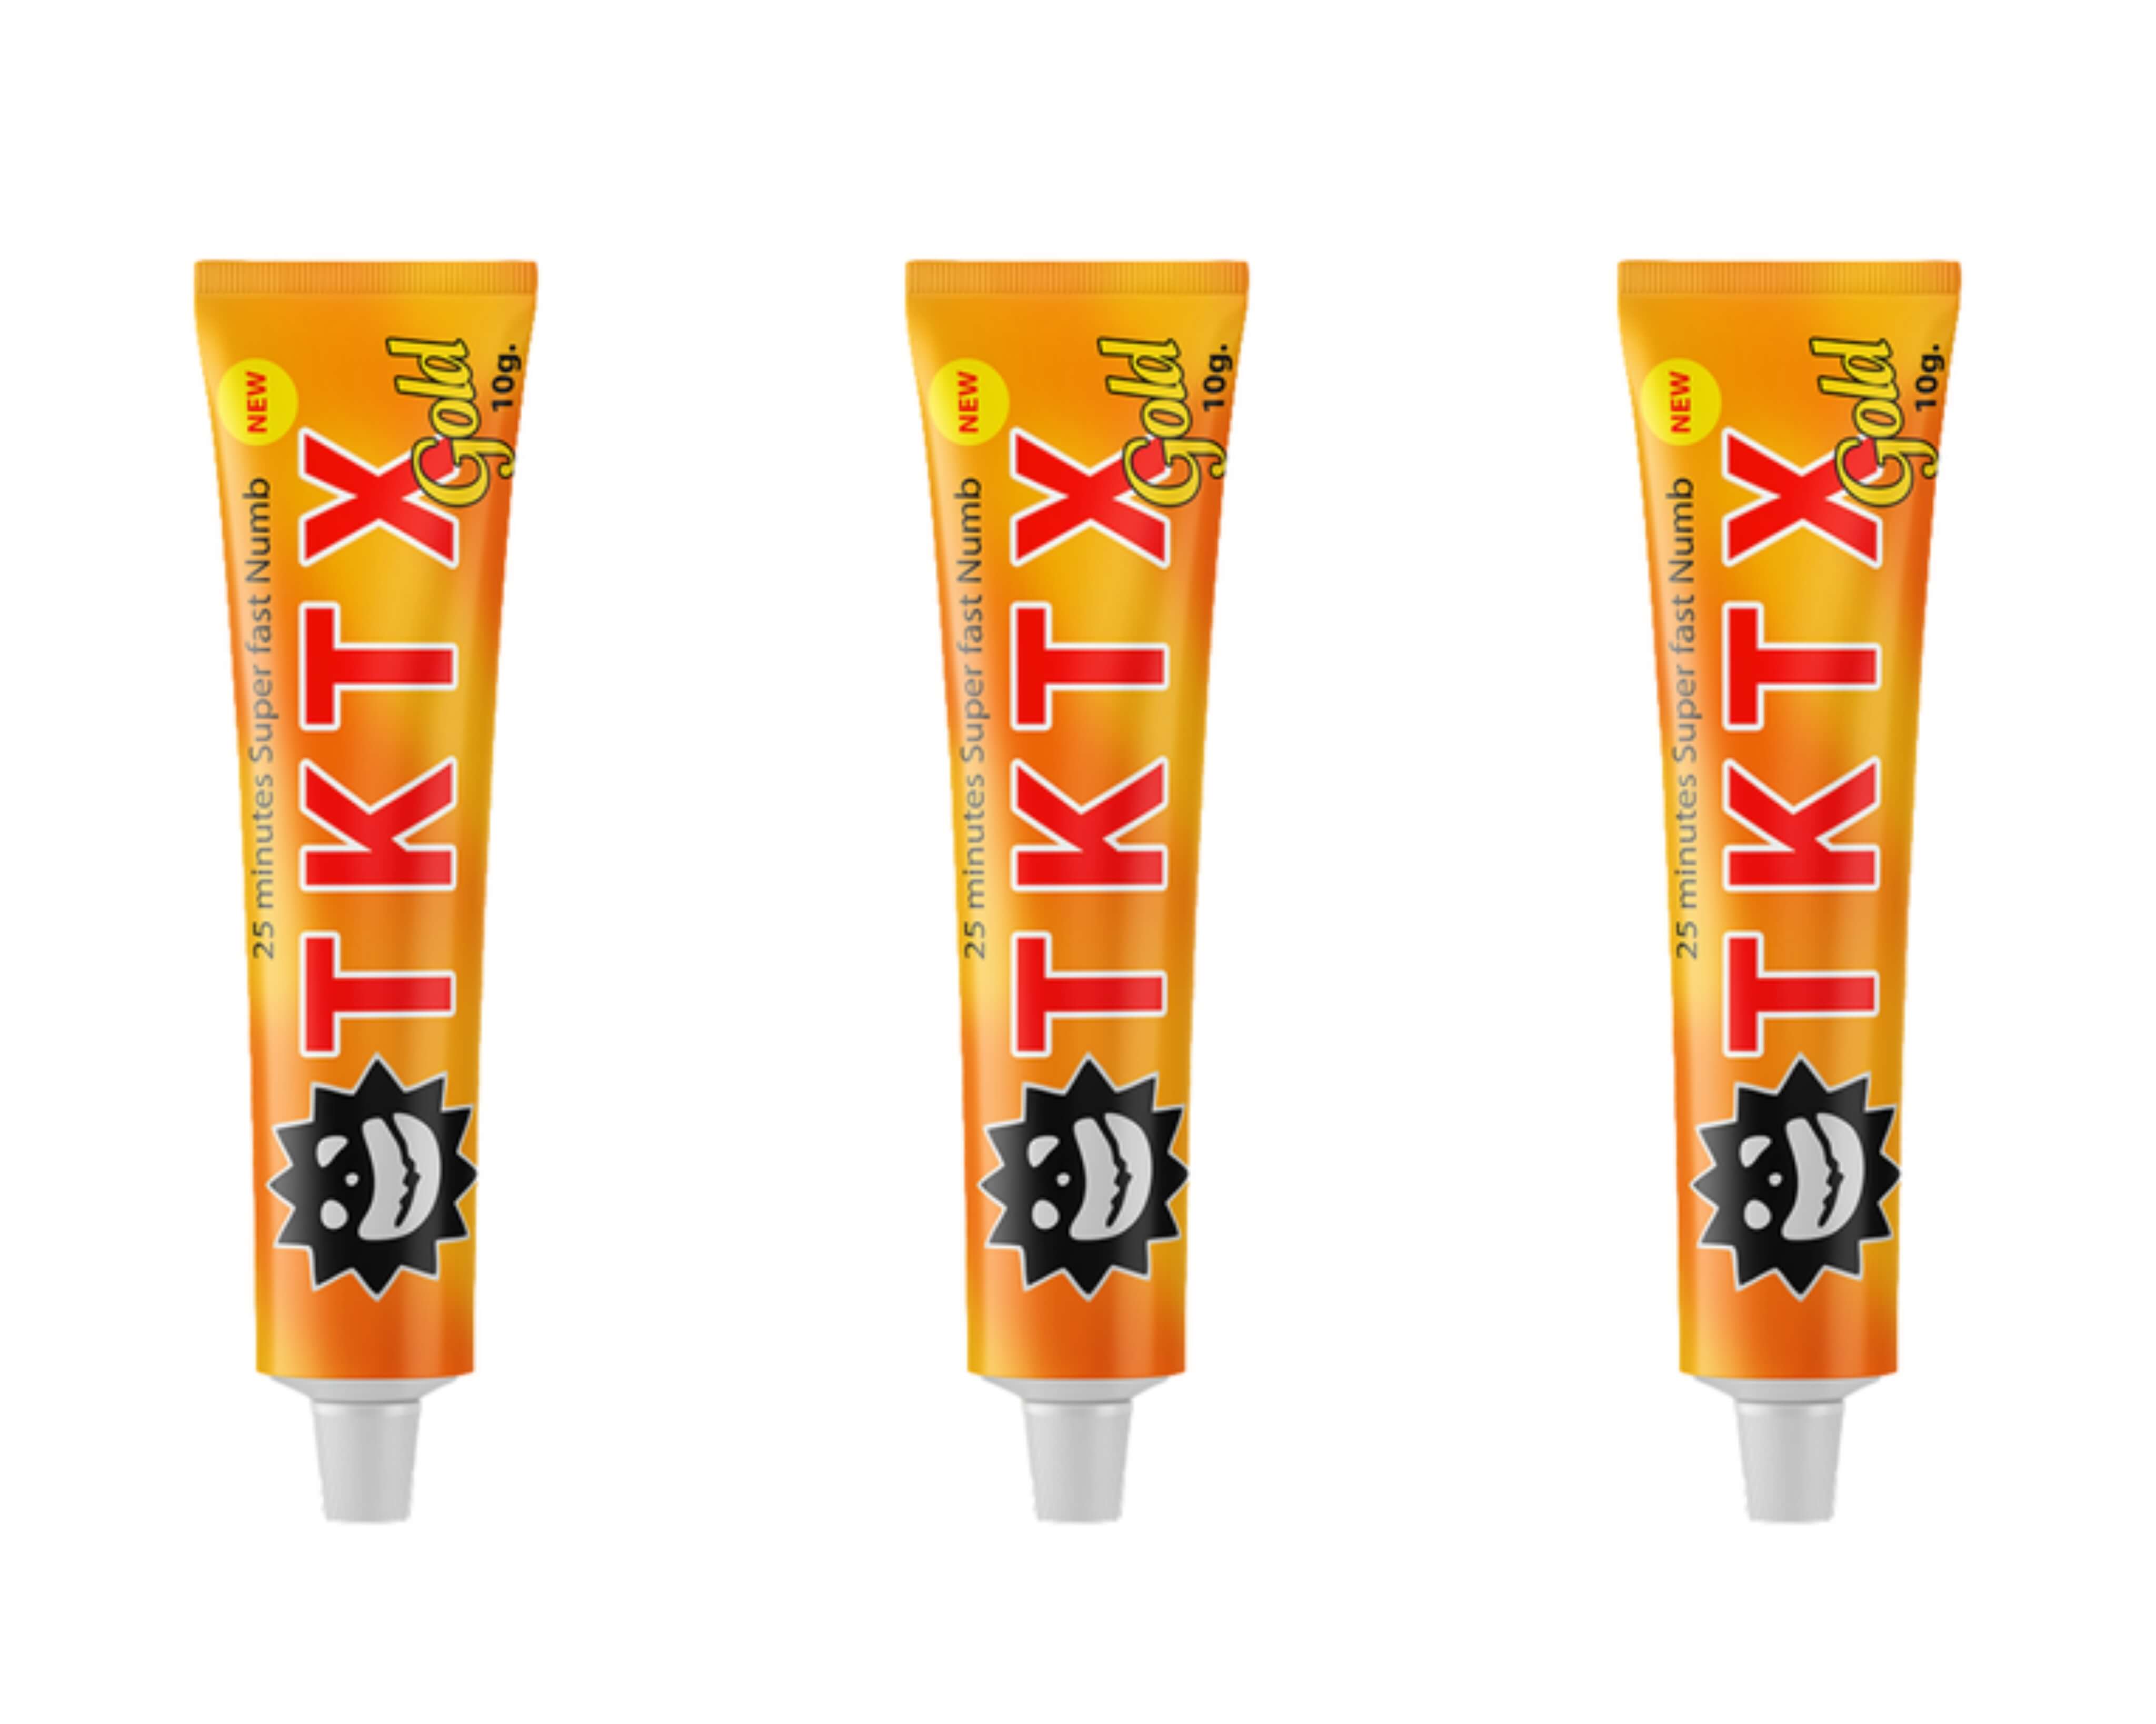 TKTX verdovingszalf crème Goud 55% 3 Halen = 2 Betalen